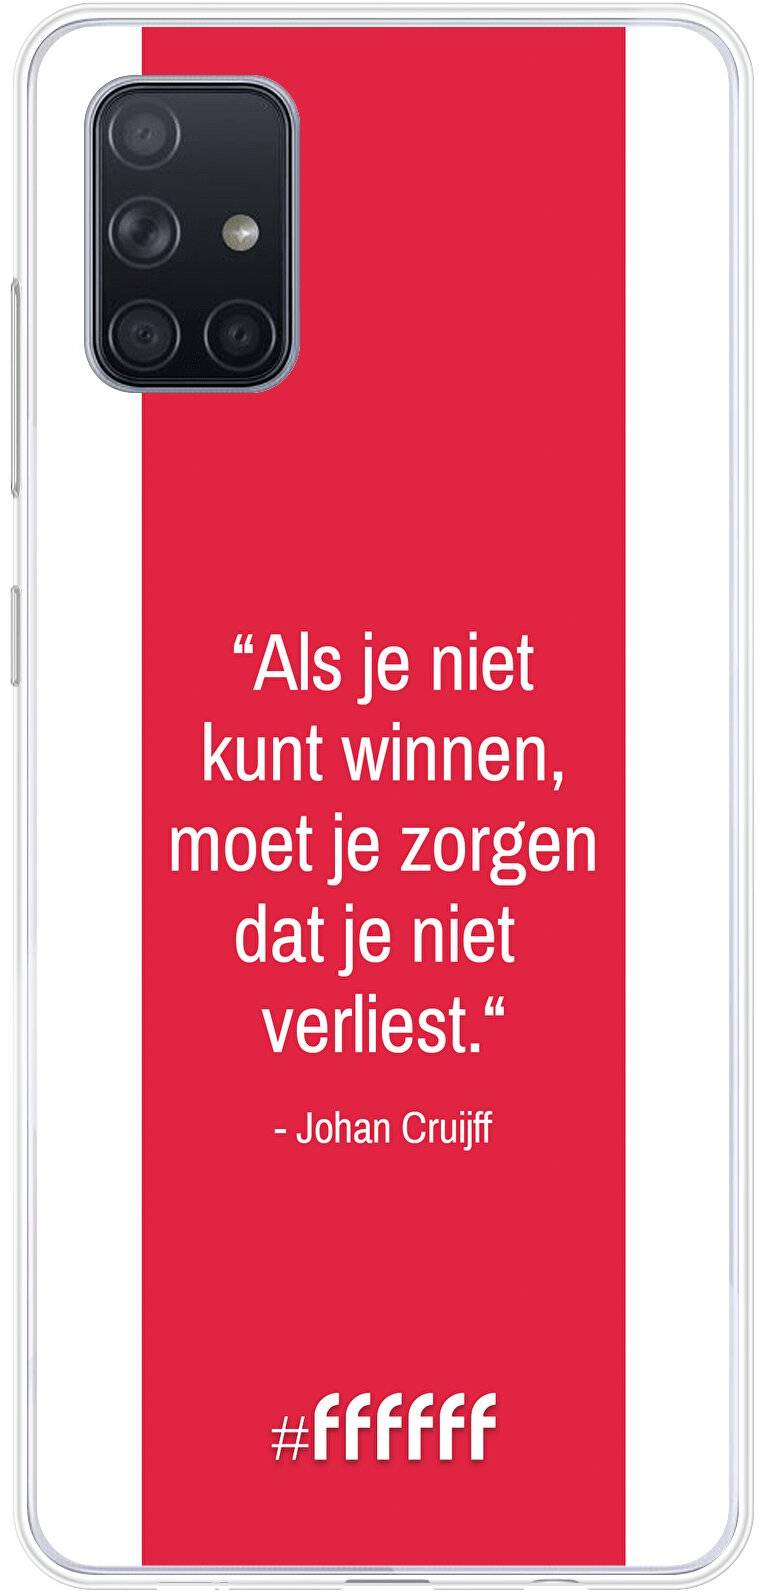 AFC Ajax Quote Johan Cruijff Galaxy A71